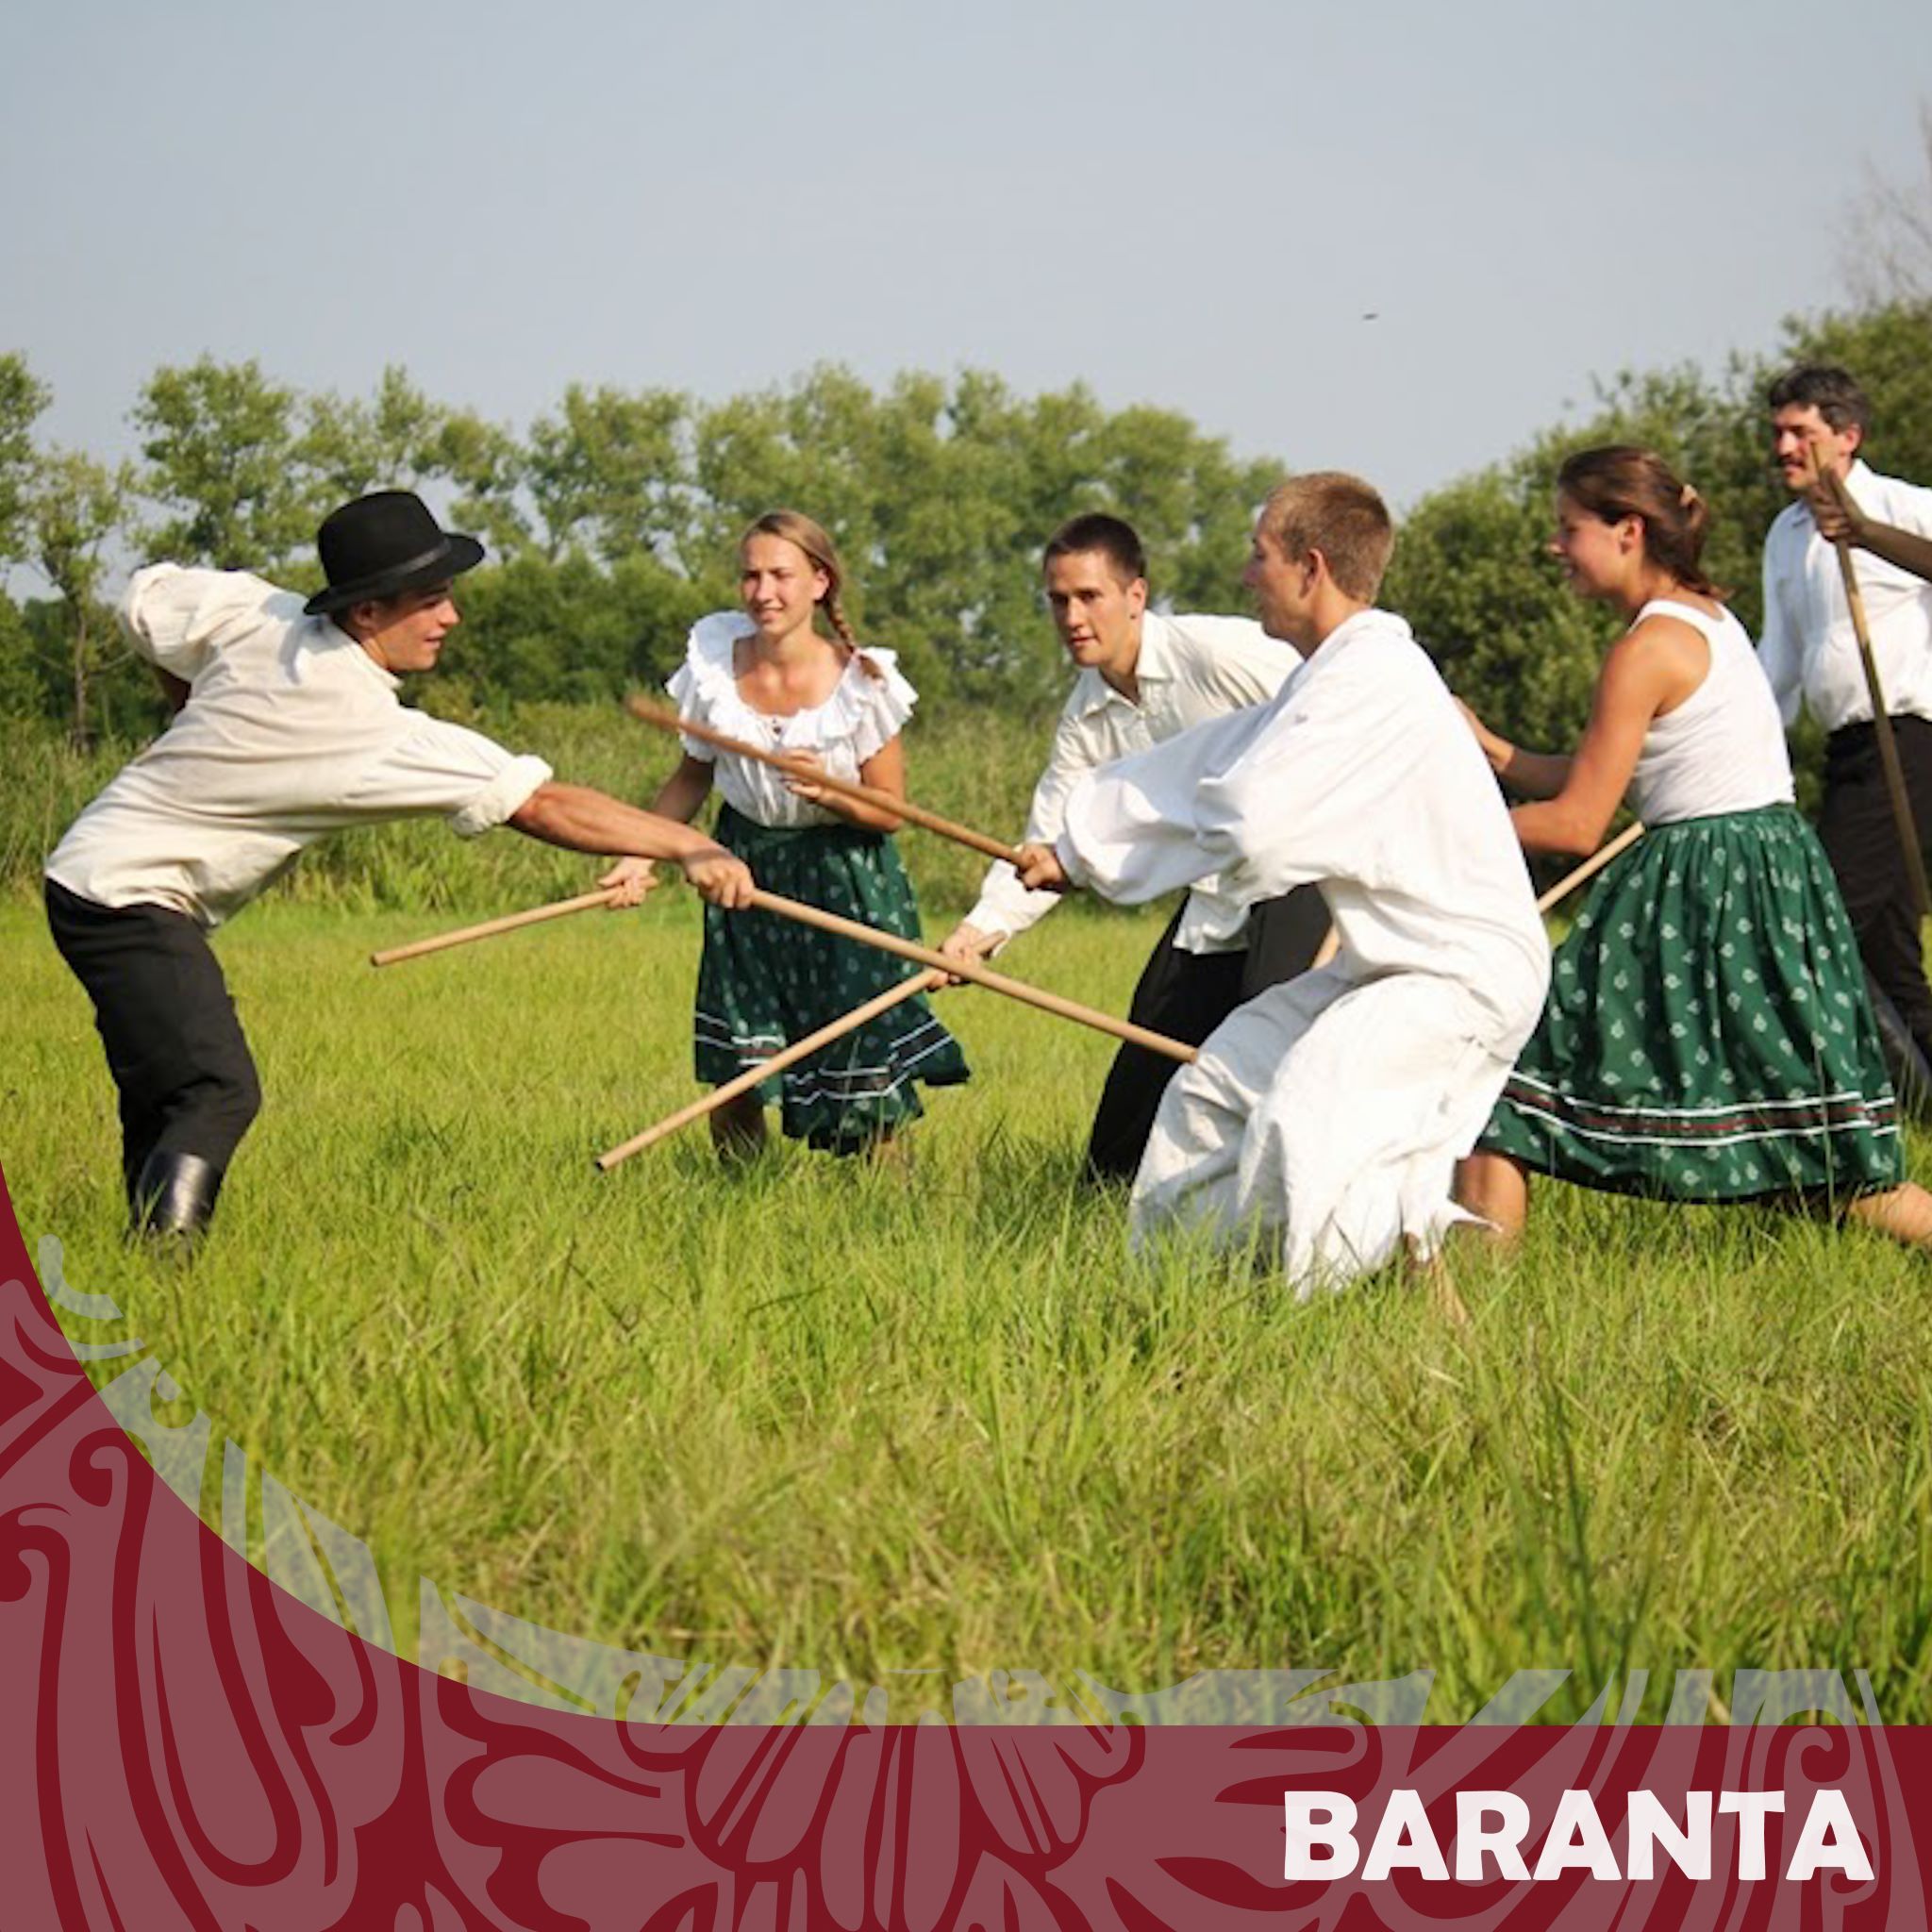 Baranta (Hungary)